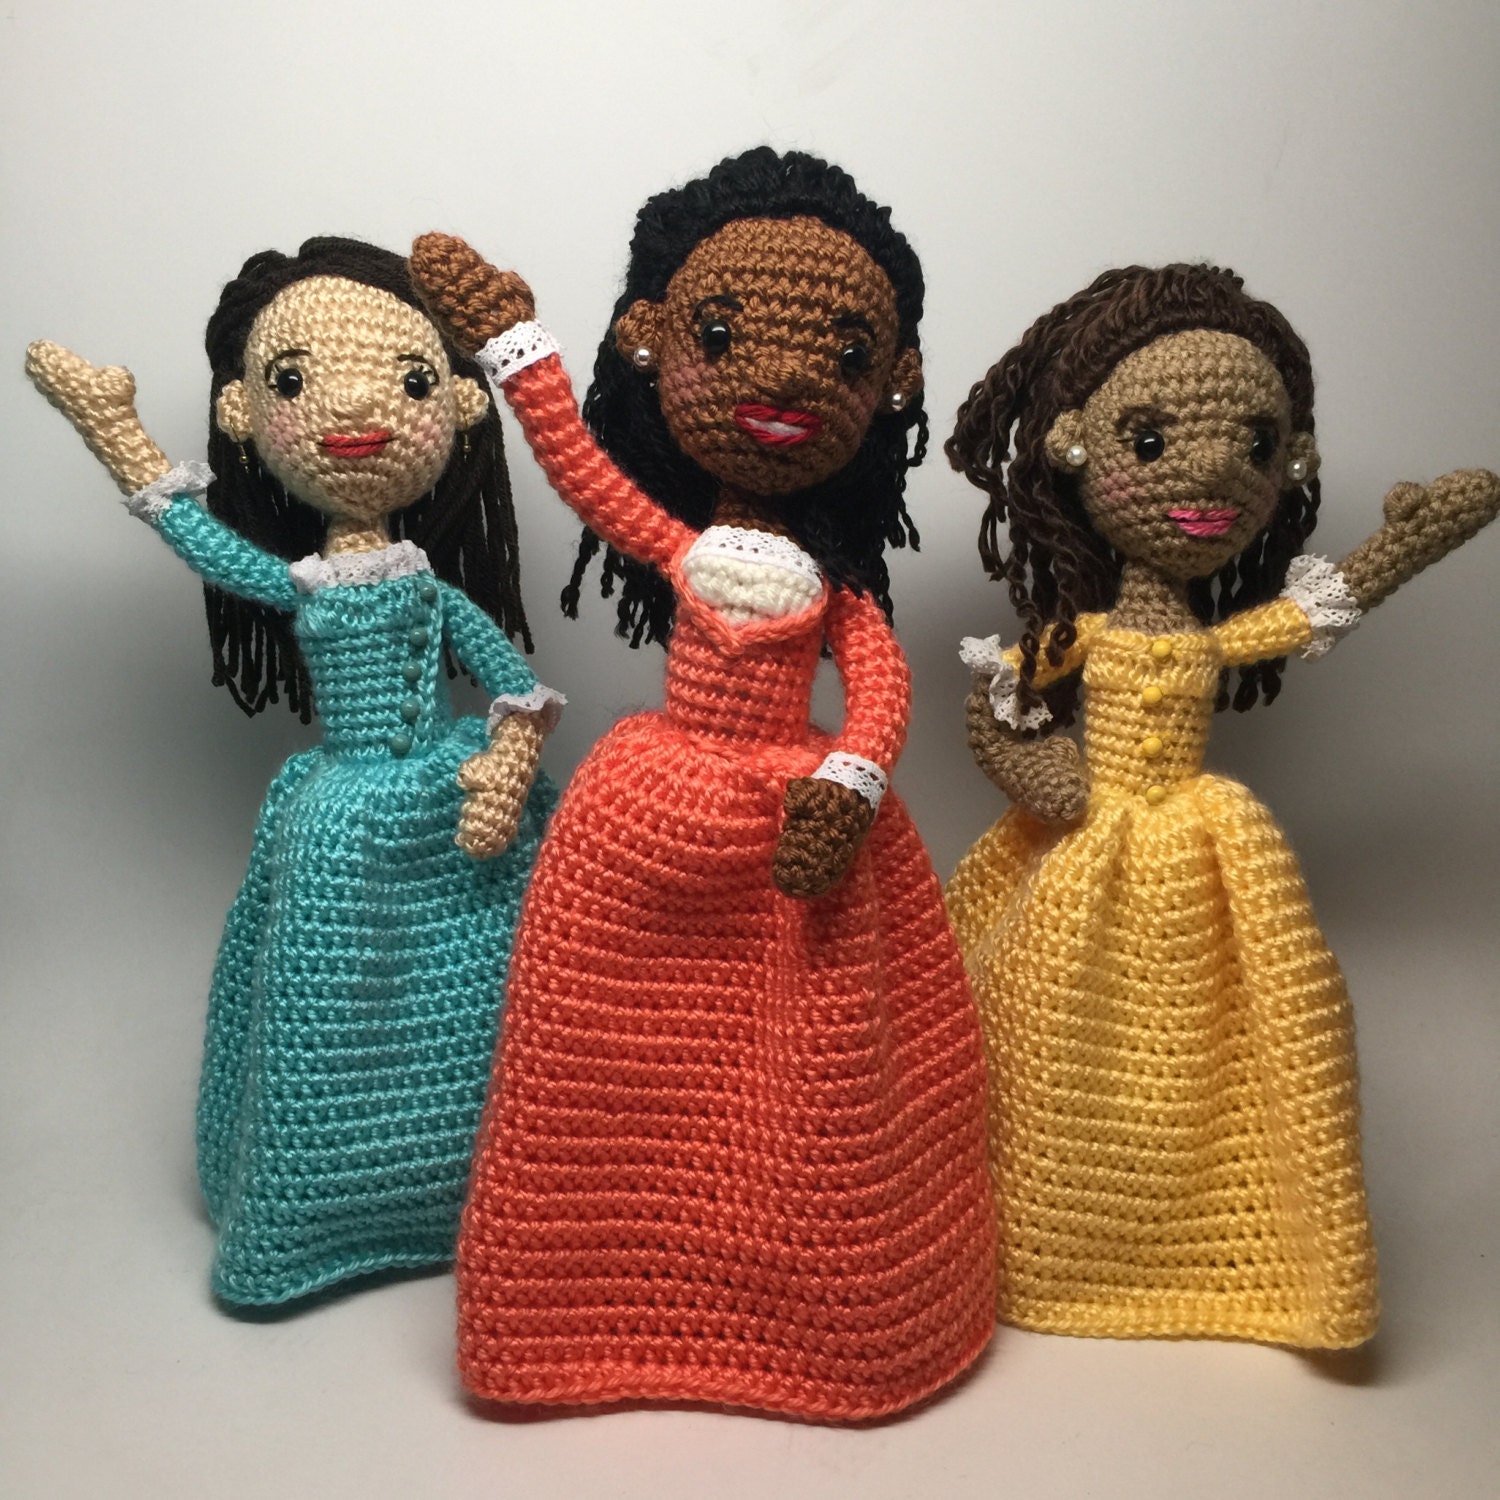 Schuyler Sisters Hamilton Musical Amigurumi Crochet dolls